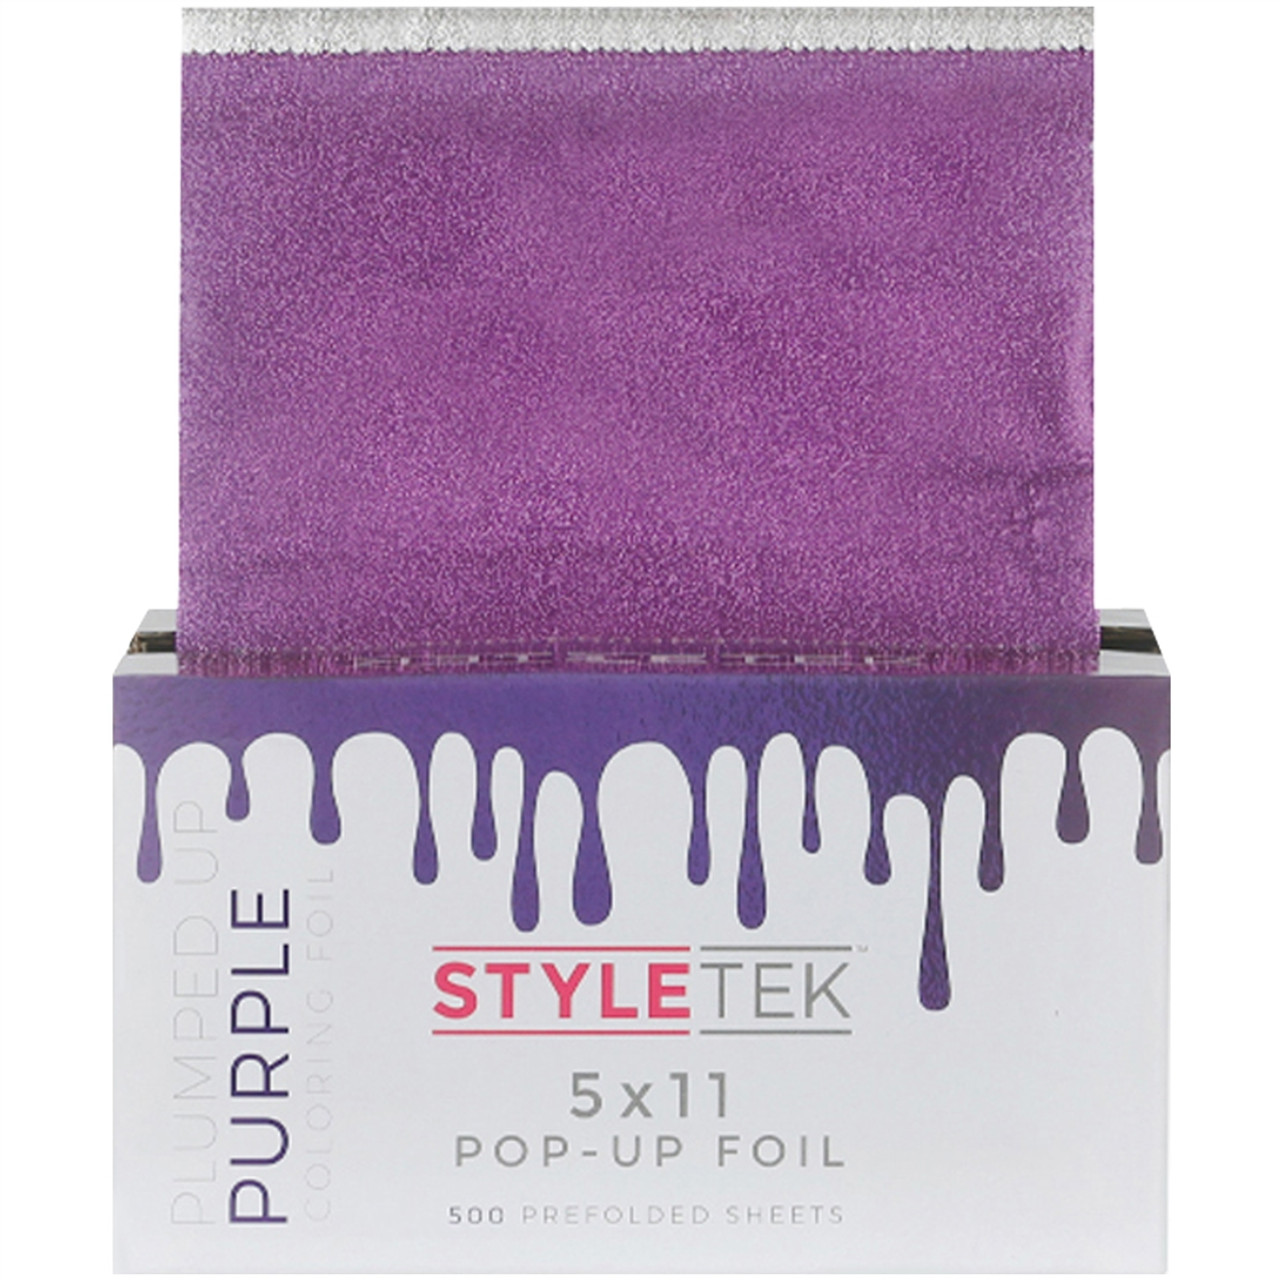 StyleTek Pop-Up Foil 5 x 11 - Moonlight Silver